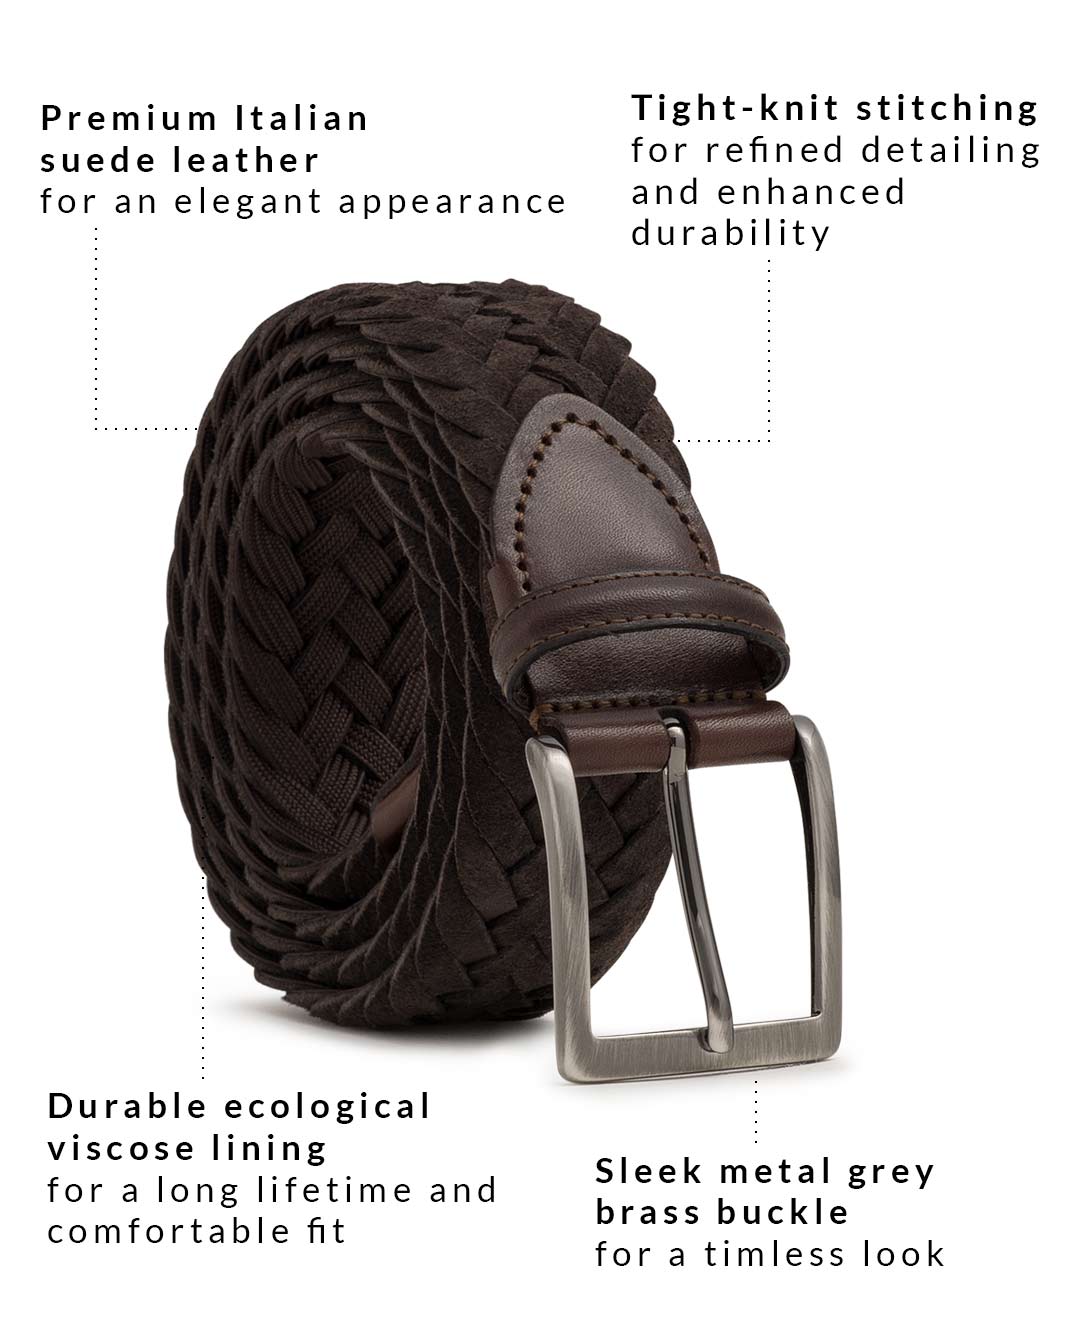 Wholesale Designer Belts for Woman metal Brand Belt Classy Elastic belt  ladies Apparel Accessory From m.